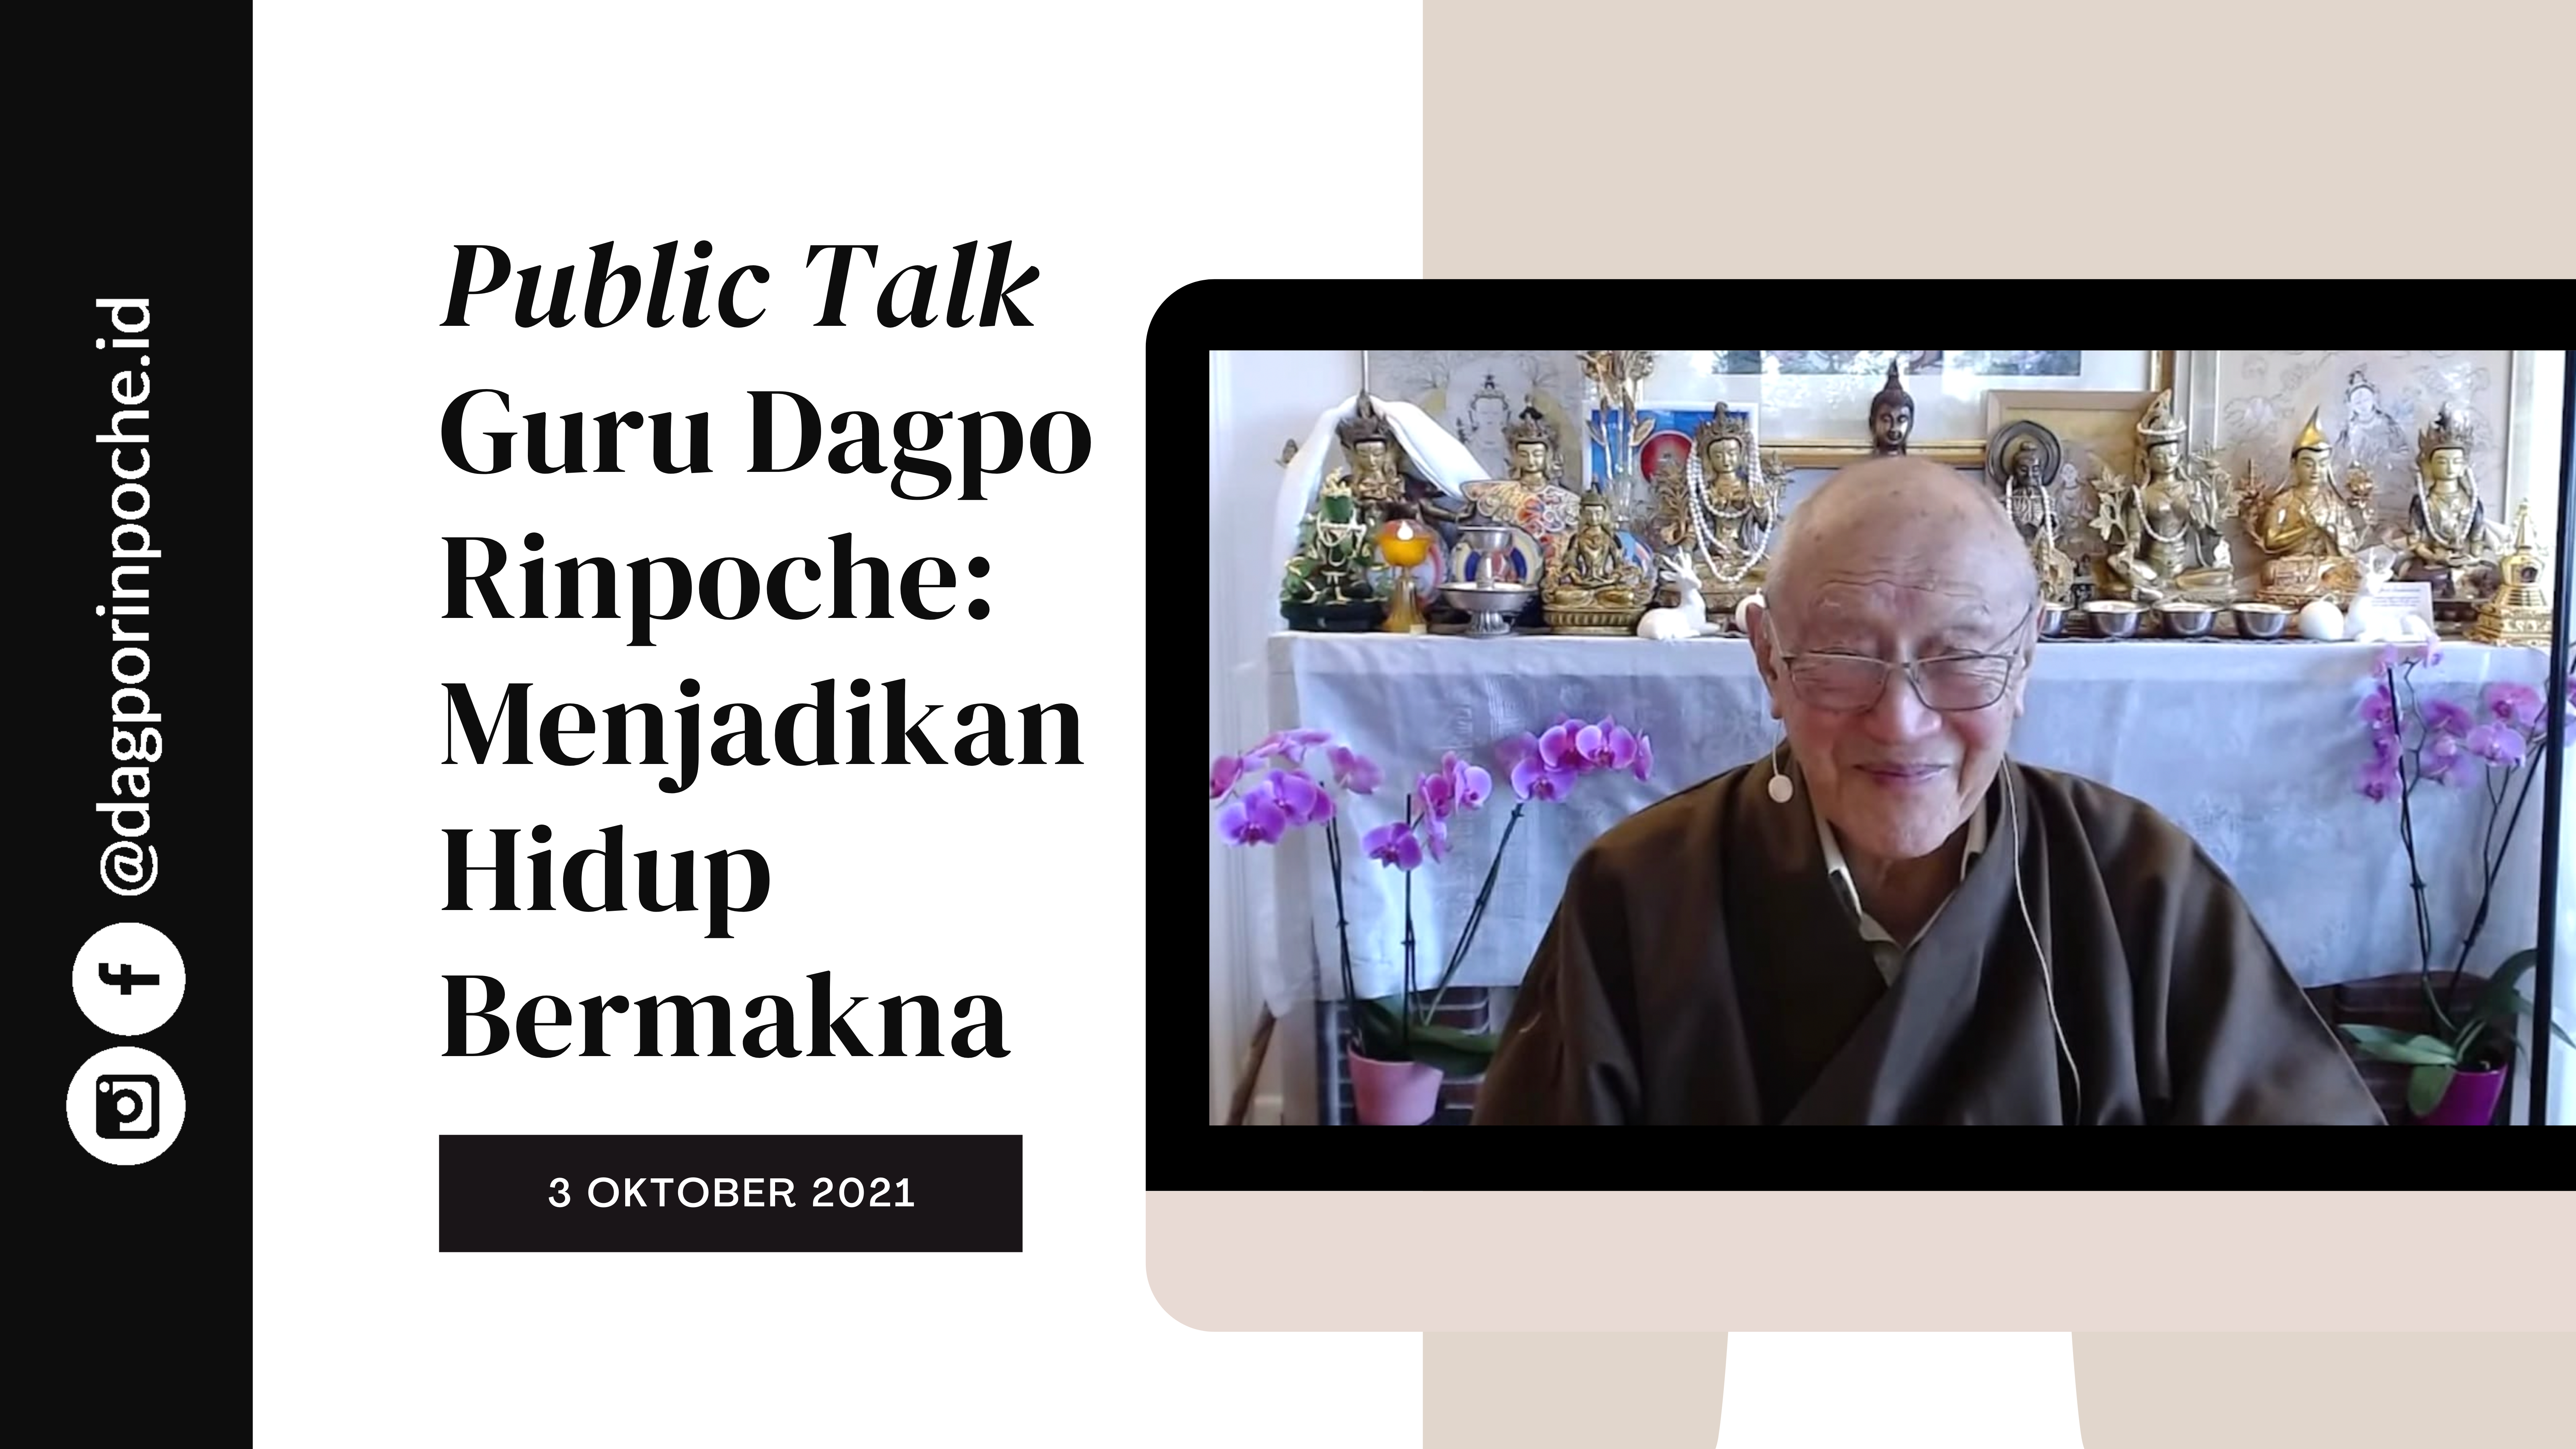 Dagpo Rinpoche's teaching